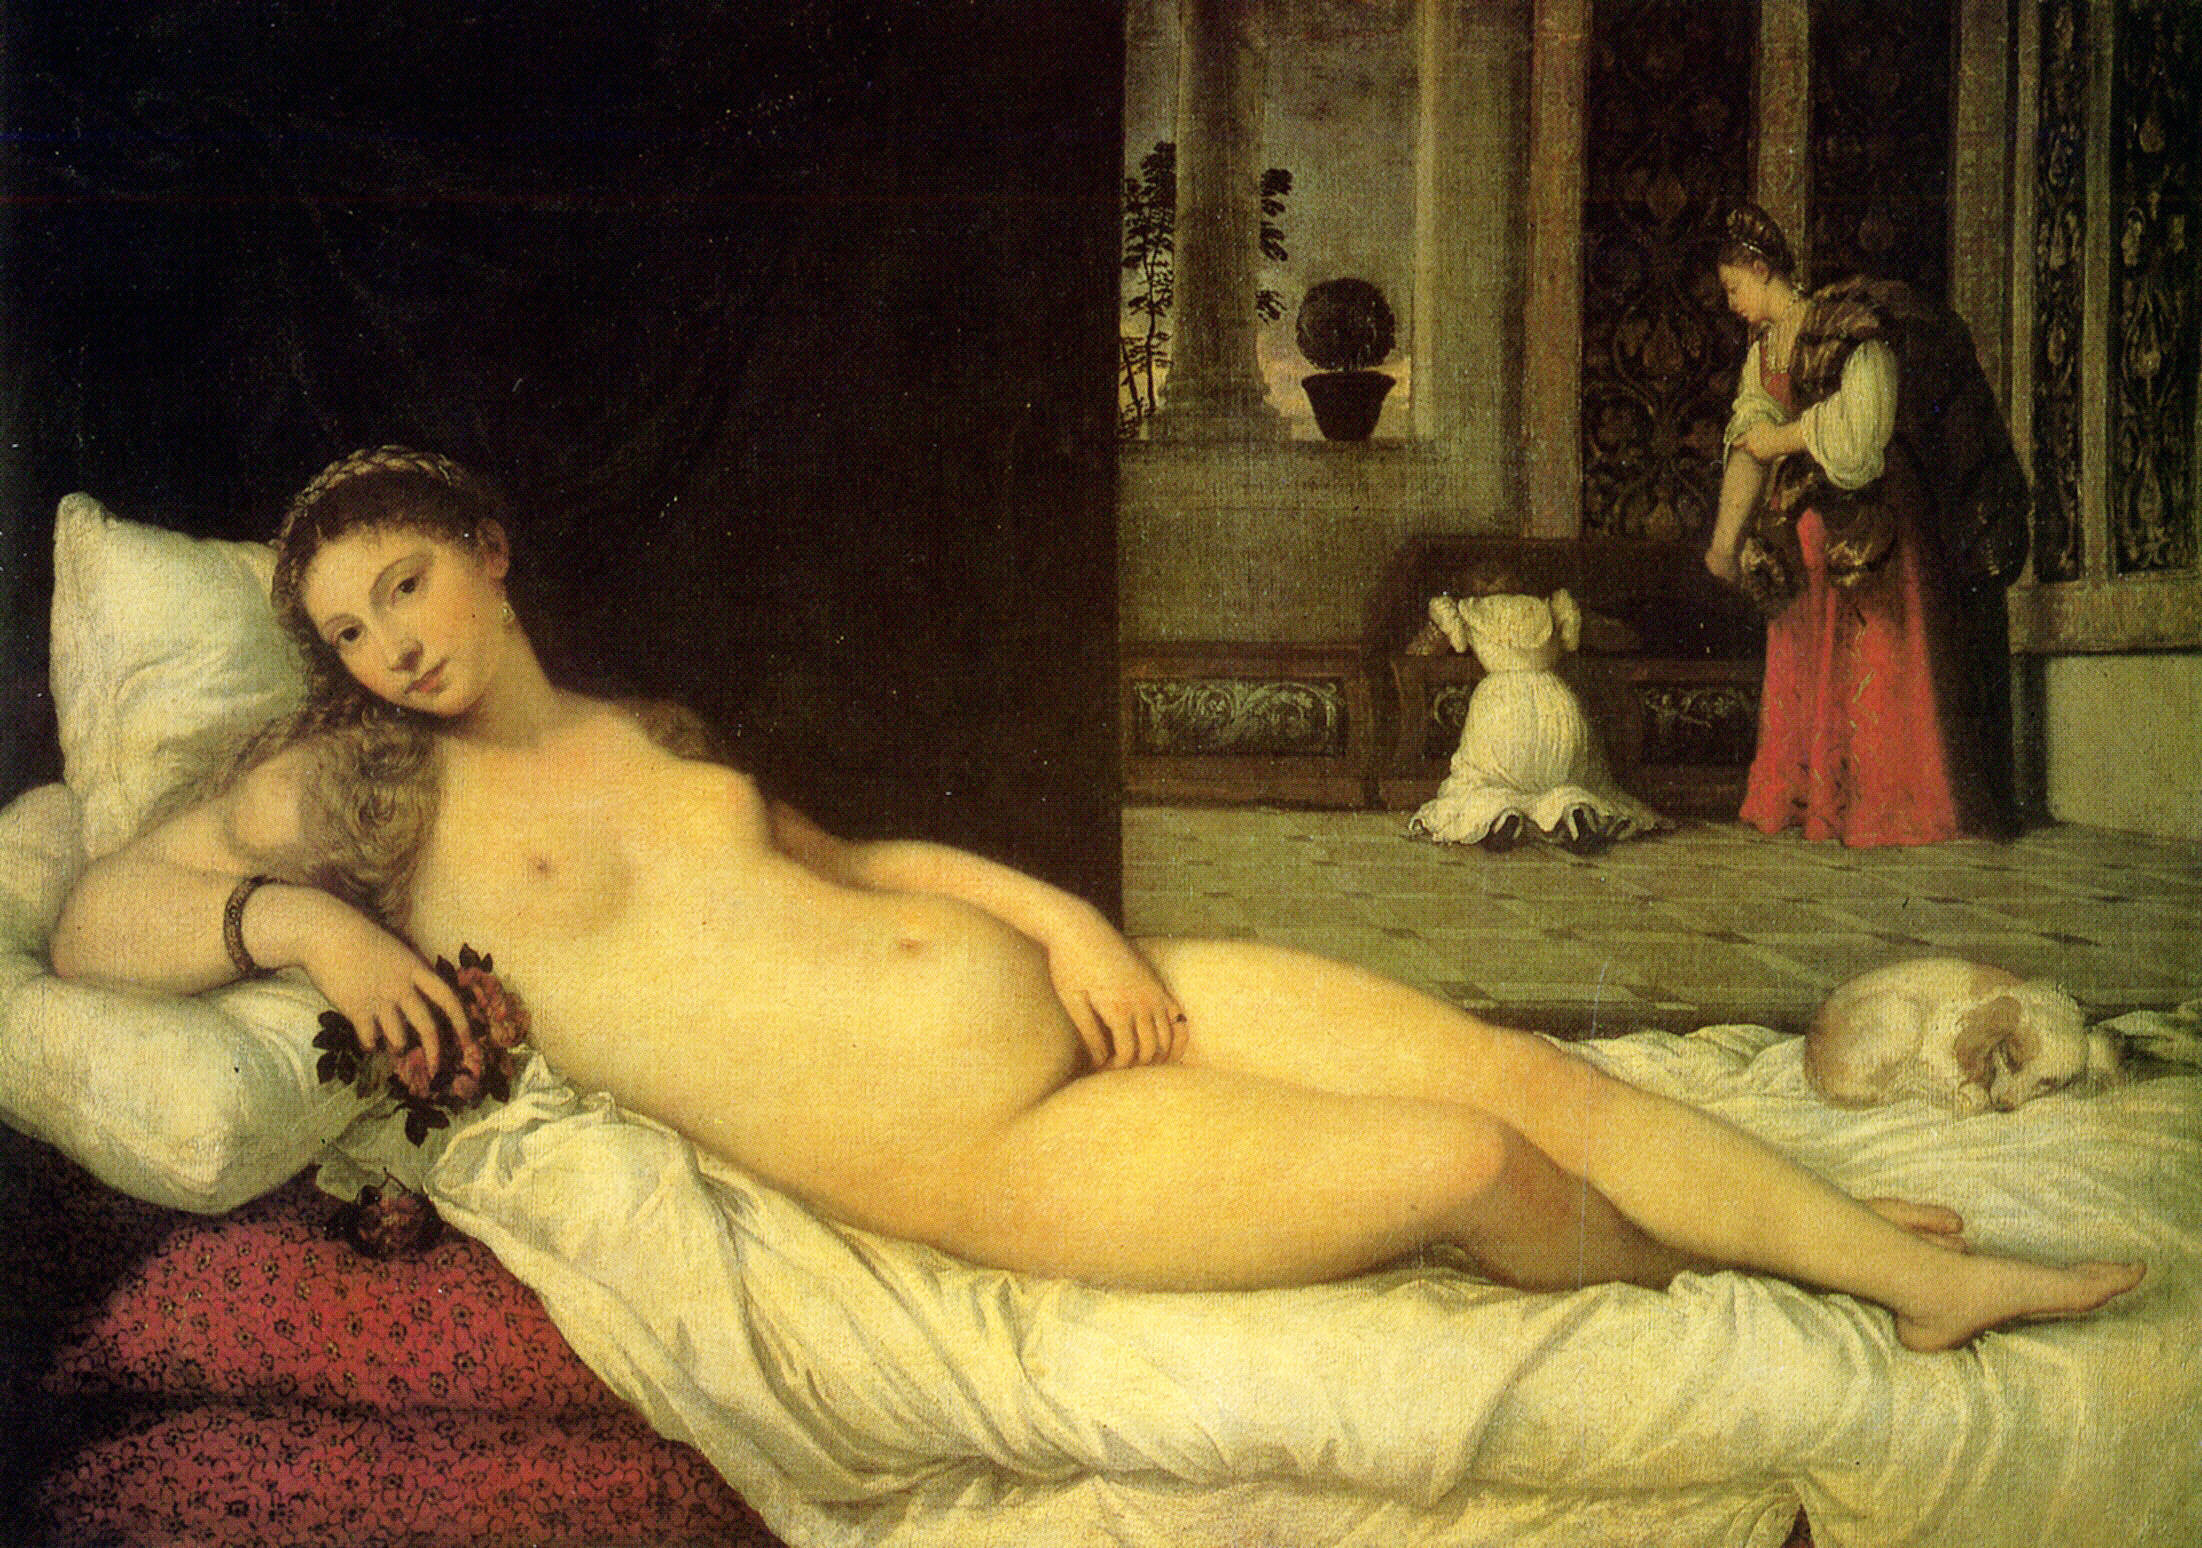 http://artmight.com/albums/2011-02-07/art-upload-2/t/Titian-Tiziano-Vecellio-/Titian-Venus-of-Urbino-1538.jpg